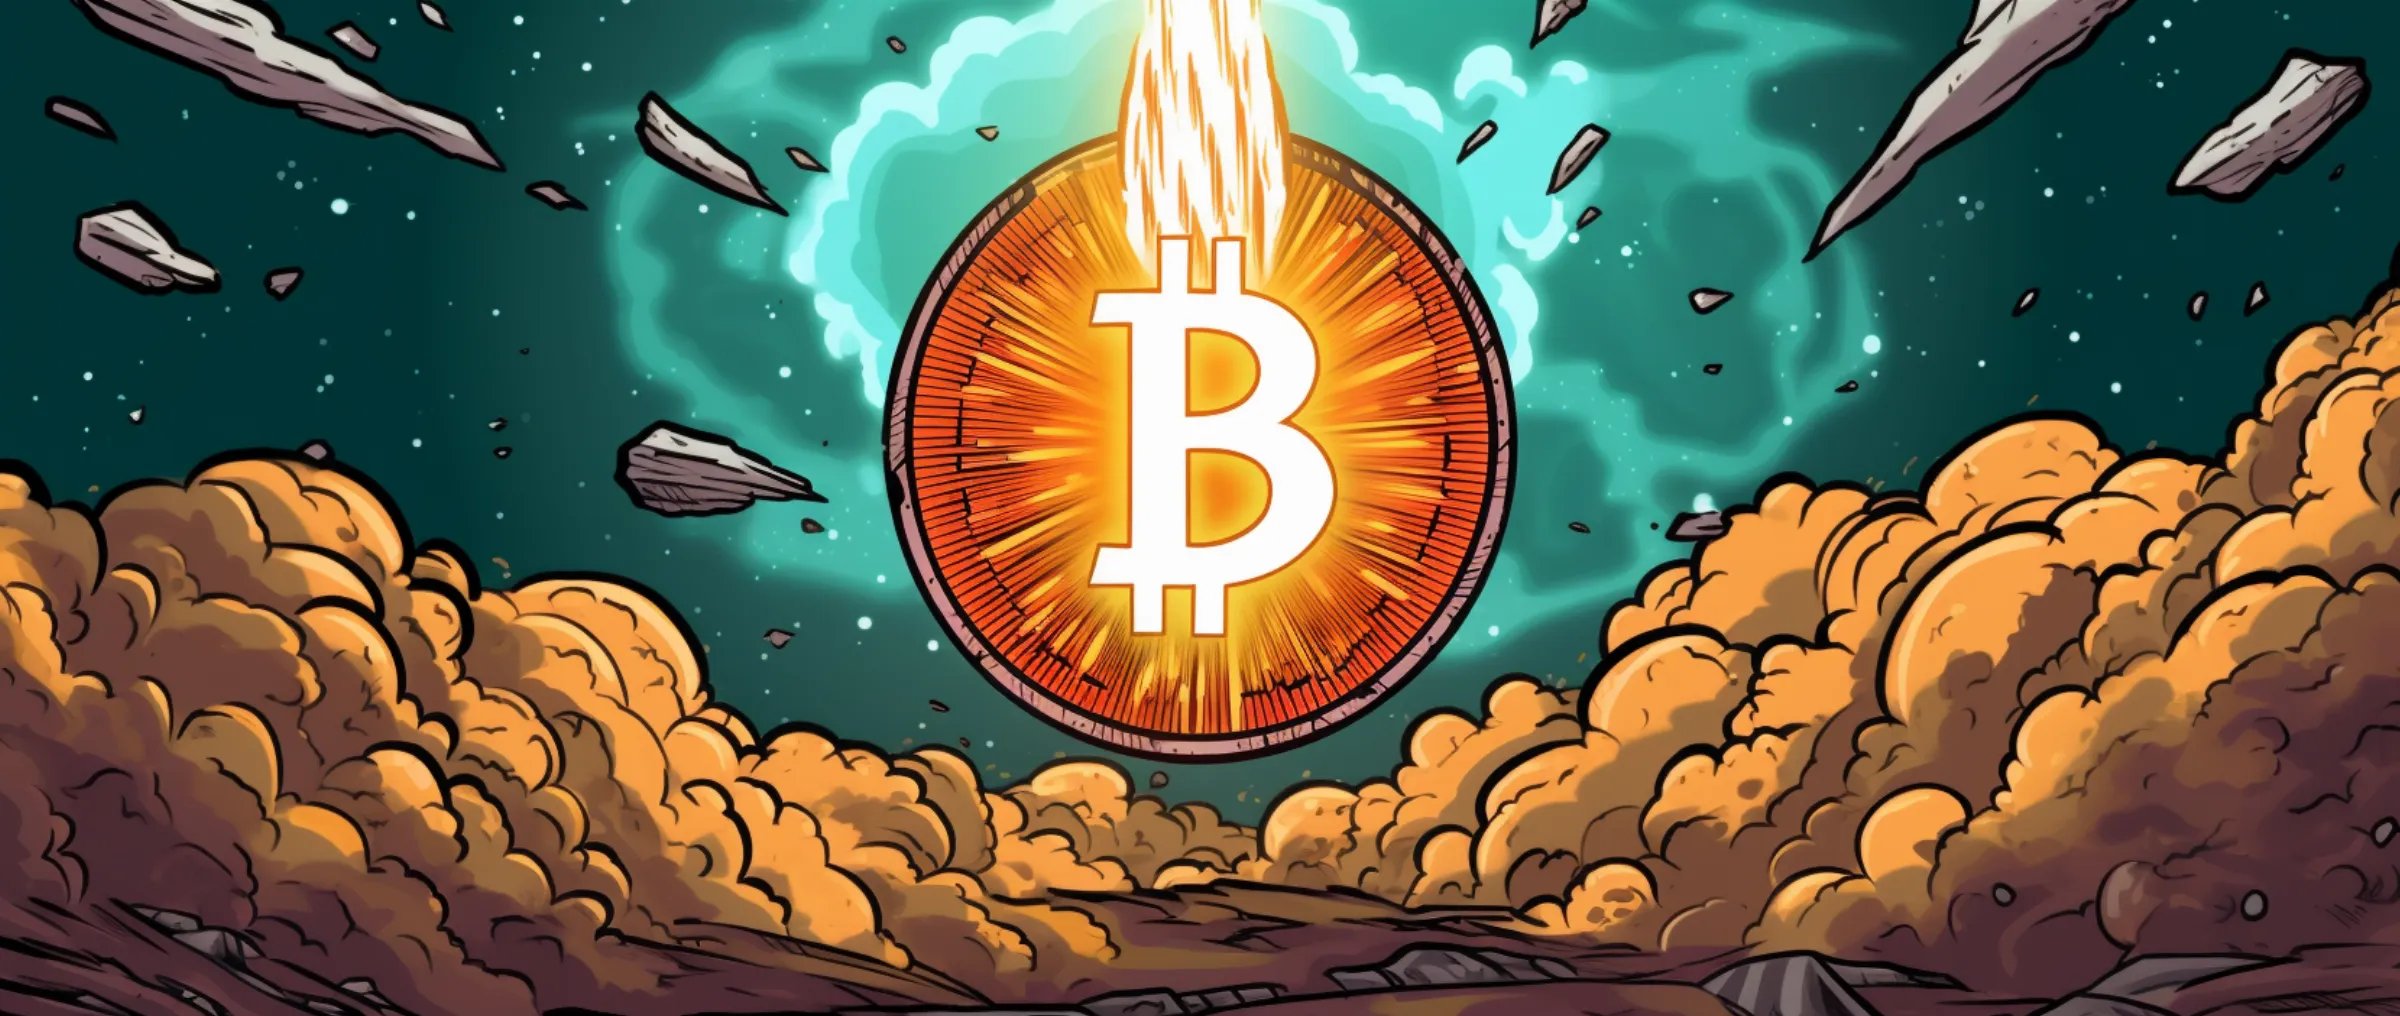 Robert Kiyosaki revealed the number of his bitcoins